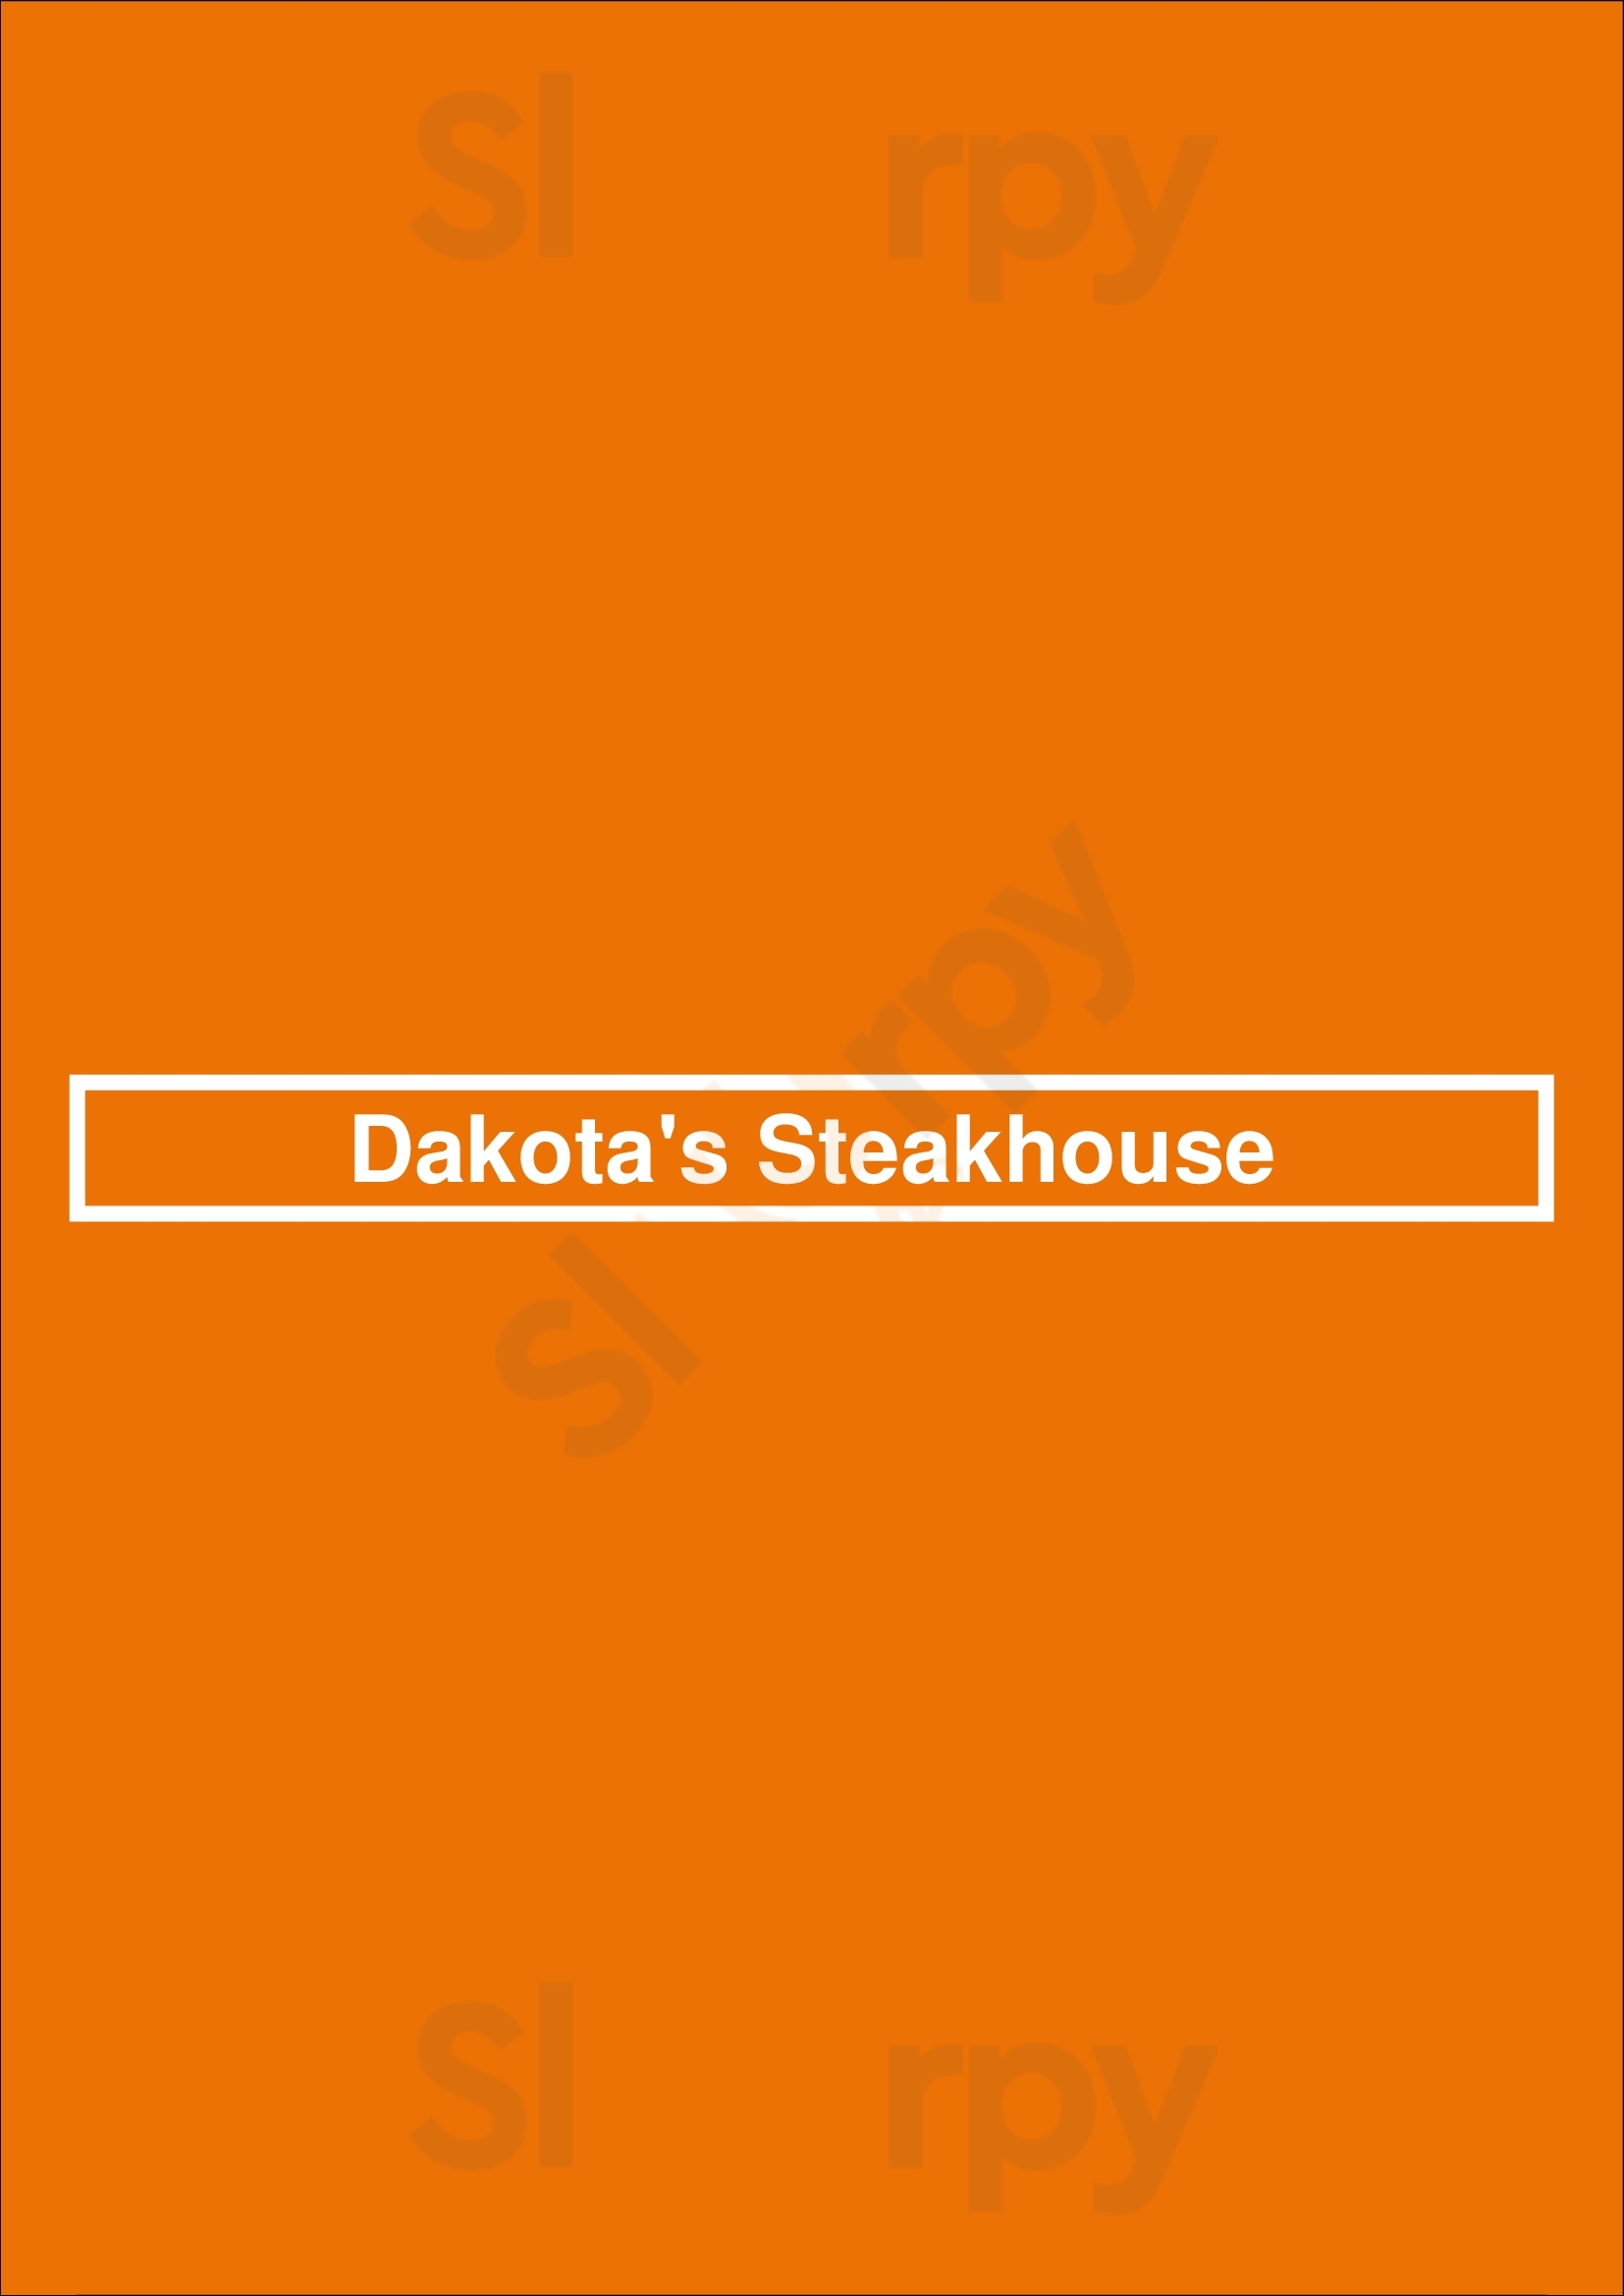 Dakota's Steakhouse Dallas Menu - 1